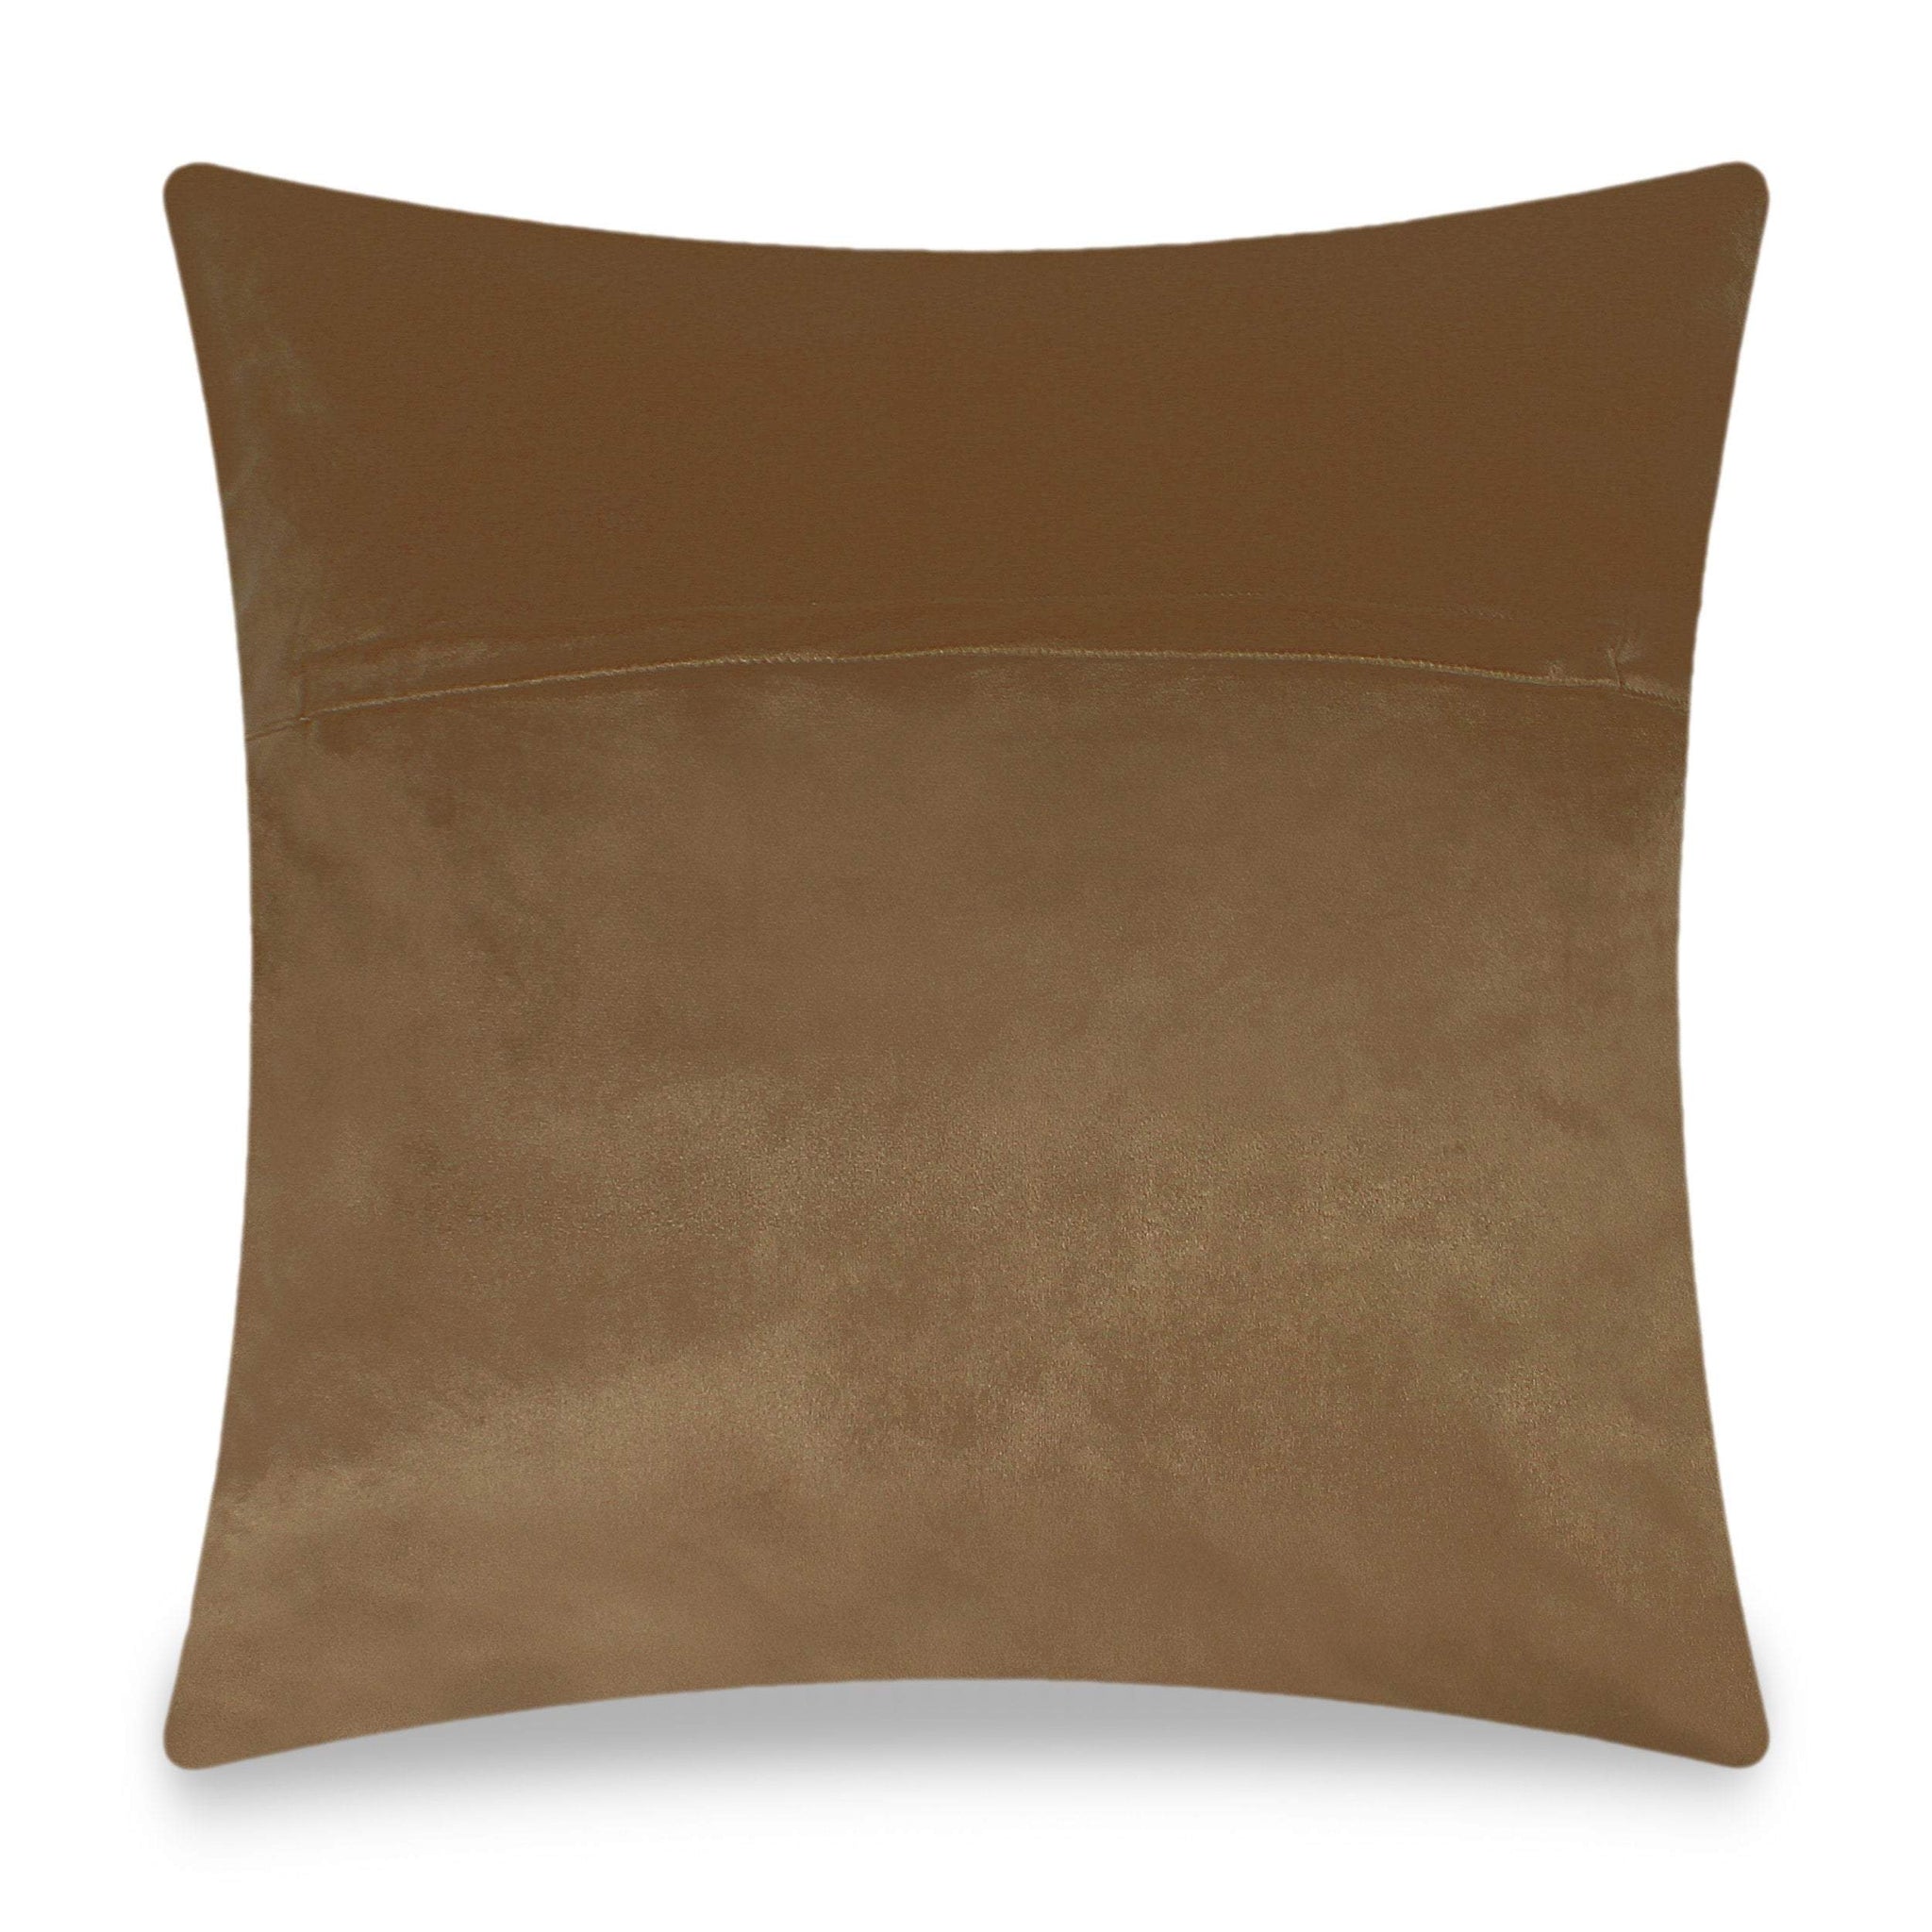 Brown Luxury Baroque Style Decorative Embroidered Cushion Cover Velvet Pillow Case Home European Sofa Throw Pillow